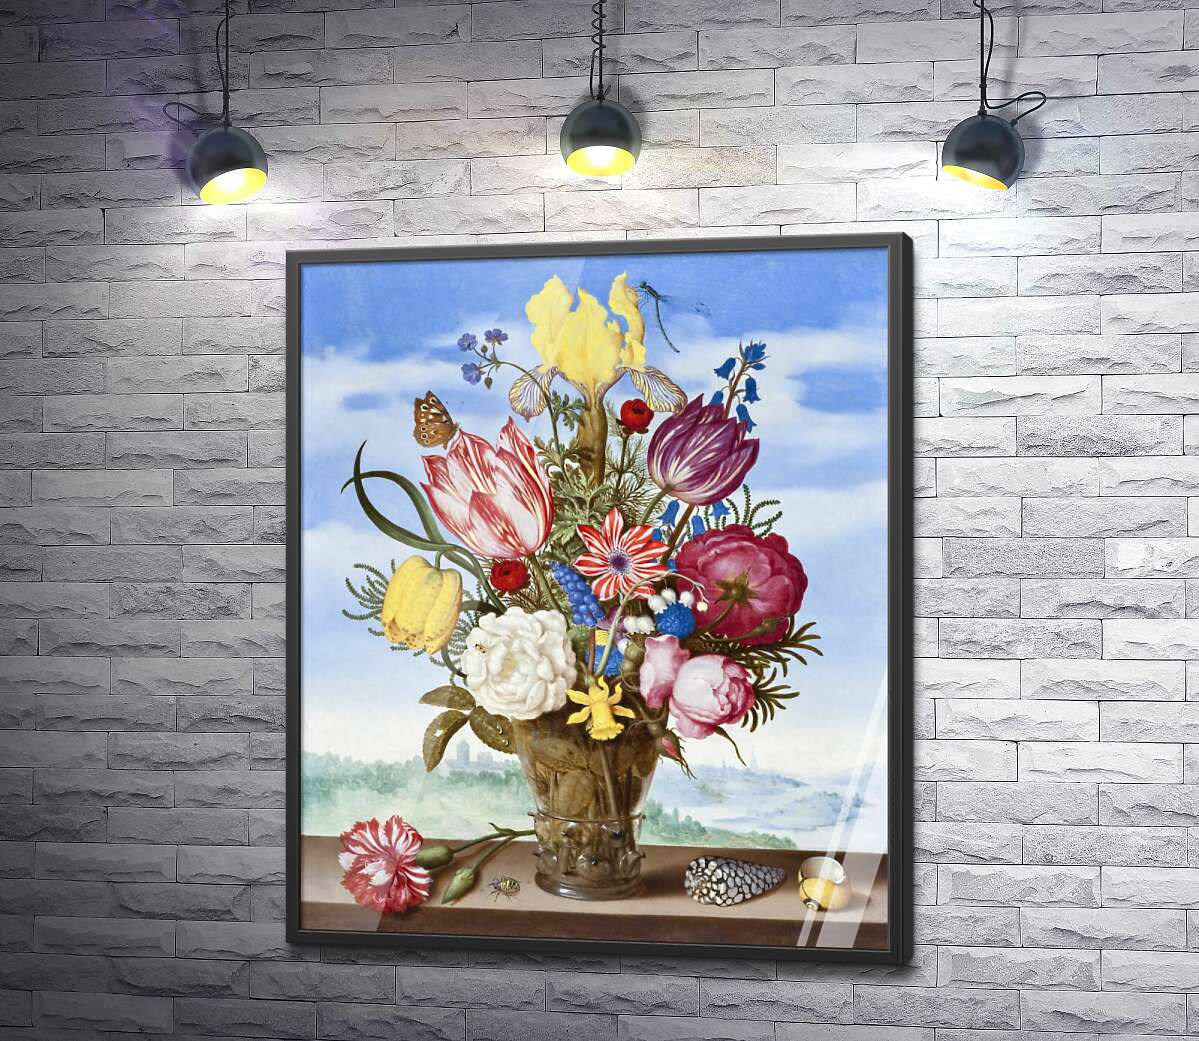 постер Букет квітів на виступі (Bouquet of Flowers on a Ledge) - Амброзіус Босгарт Старший (Ambrosius Bosschaert the Elder)